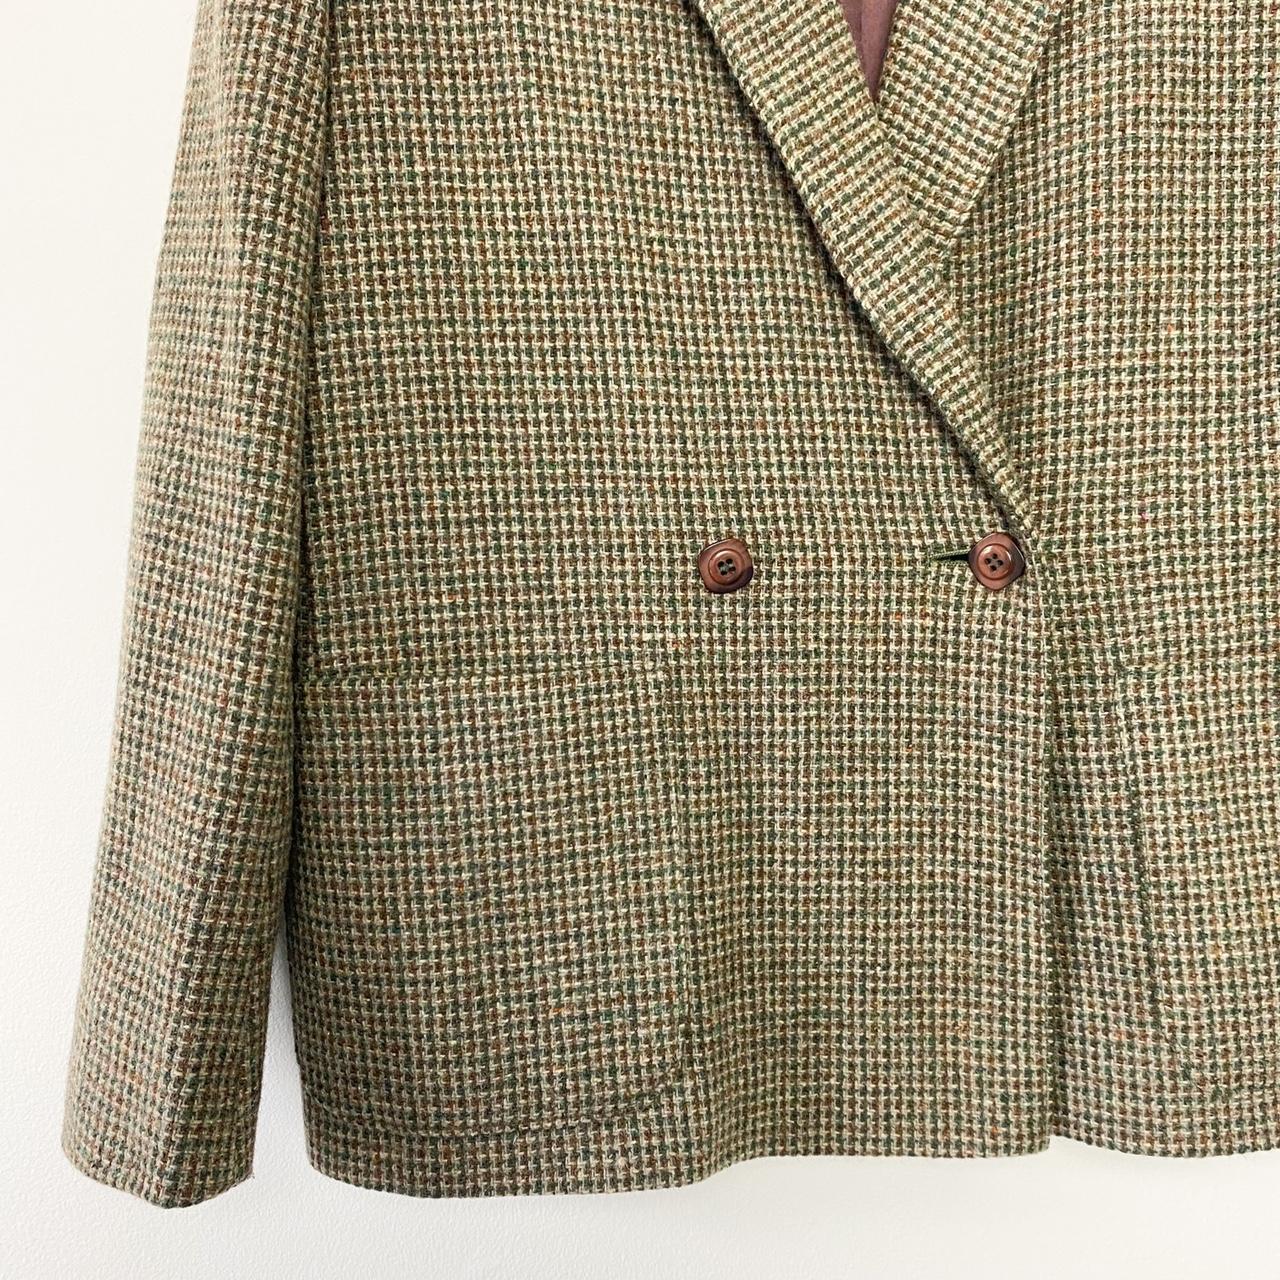 Lovely vintage blazer with pockets. Very good... - Depop